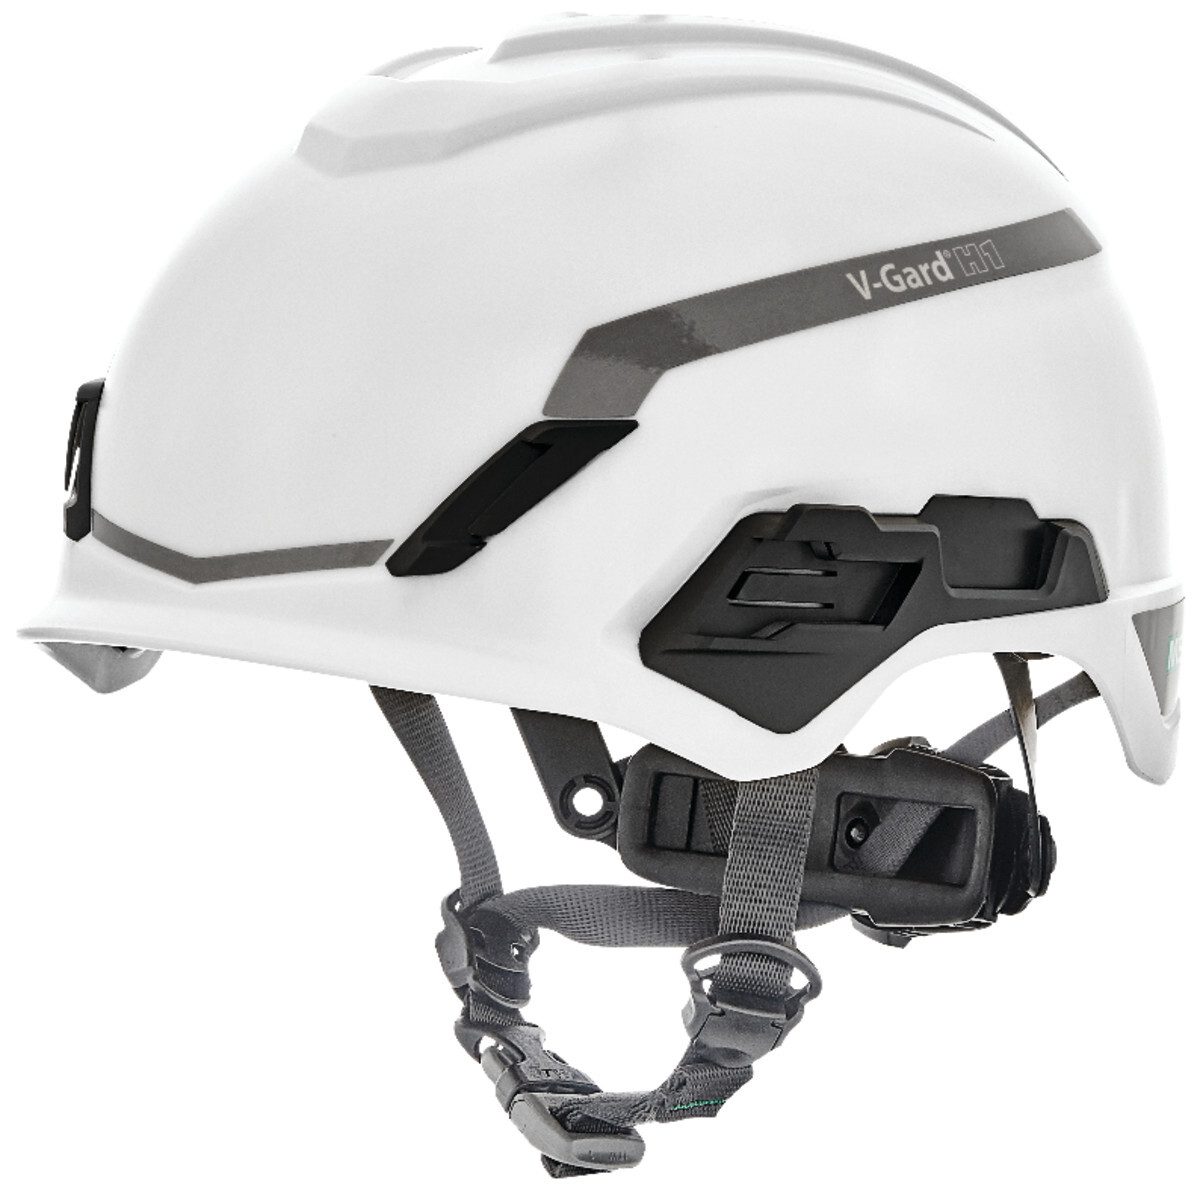 MSA White V-Gard® H1 Safety Helmet HDPE Cap Style Climbing Helmet With Ratchet Suspension